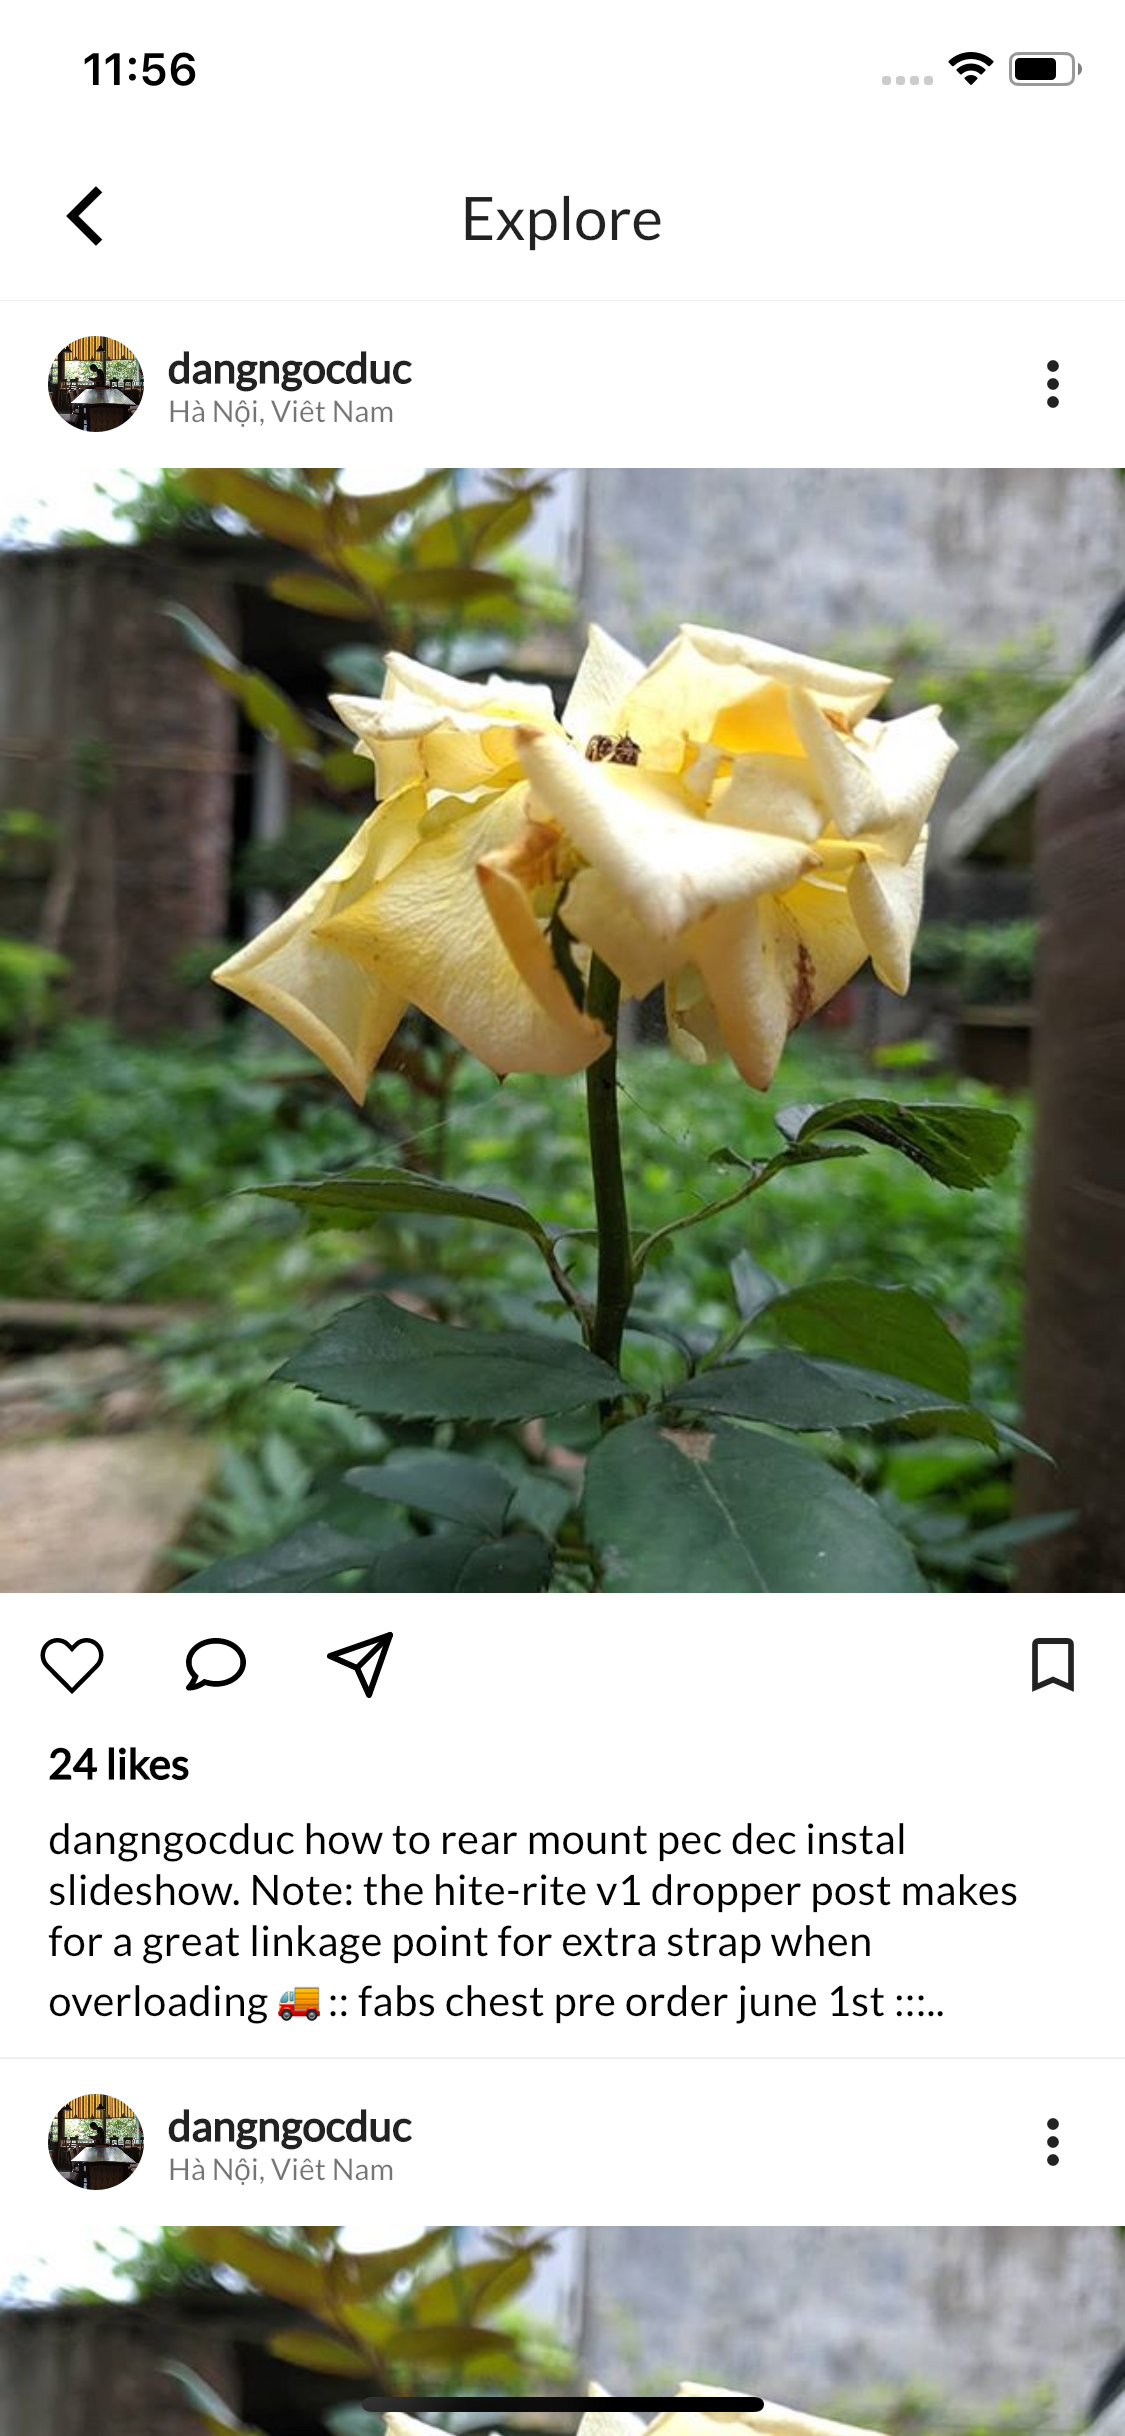 A Flutter Instagram UI Clone Support Night Mode